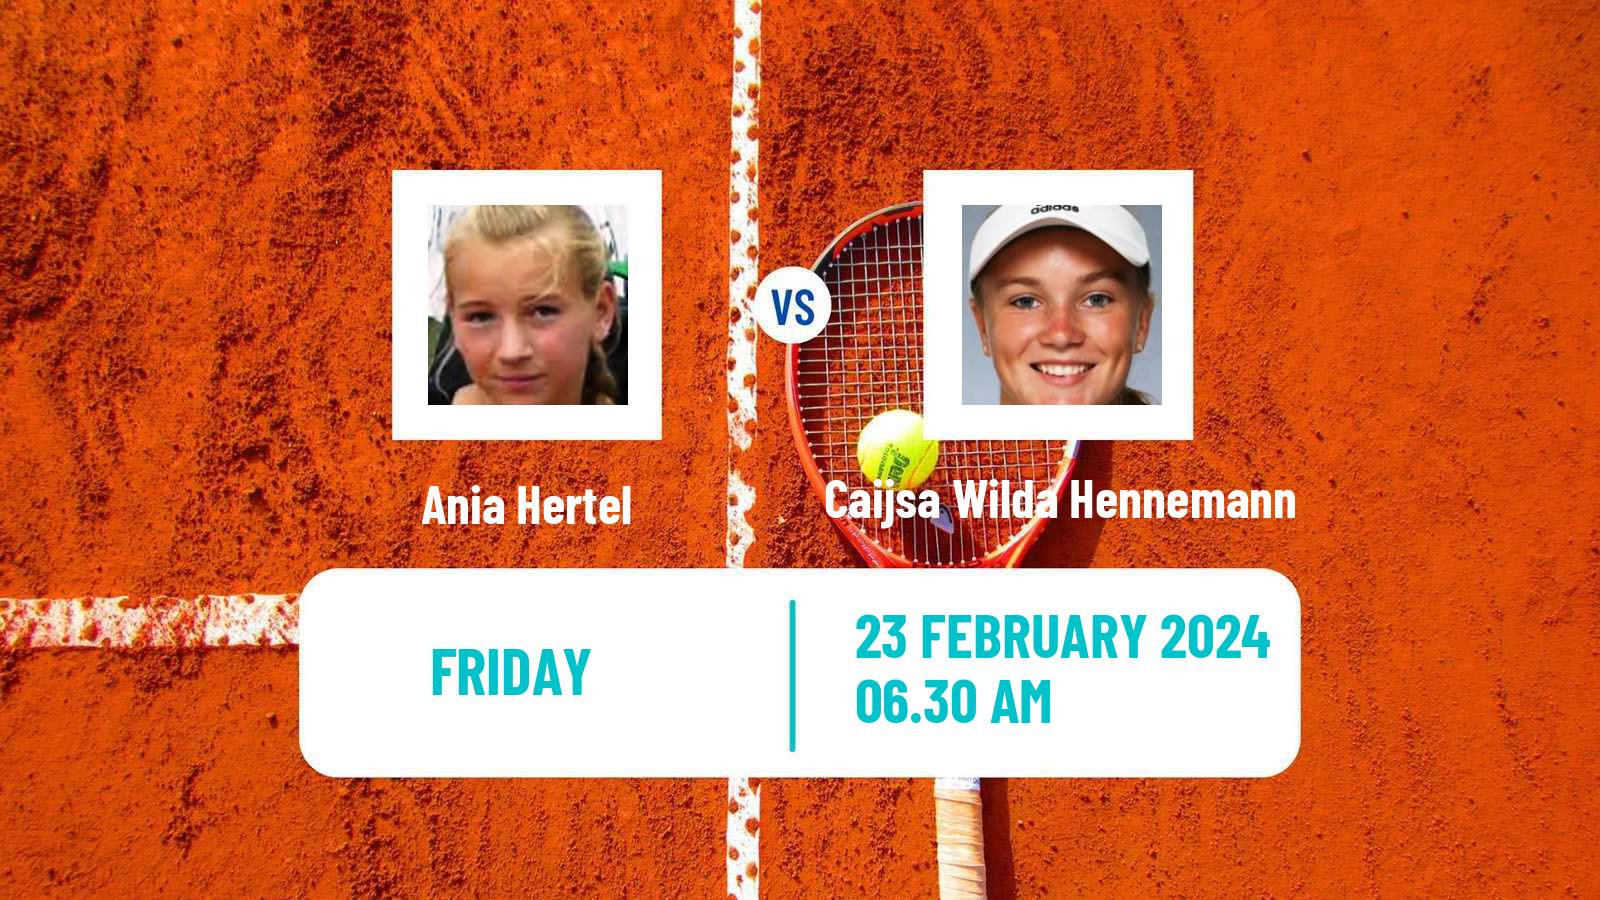 Tennis ITF W15 Manacor 2 Women Ania Hertel - Caijsa Wilda Hennemann